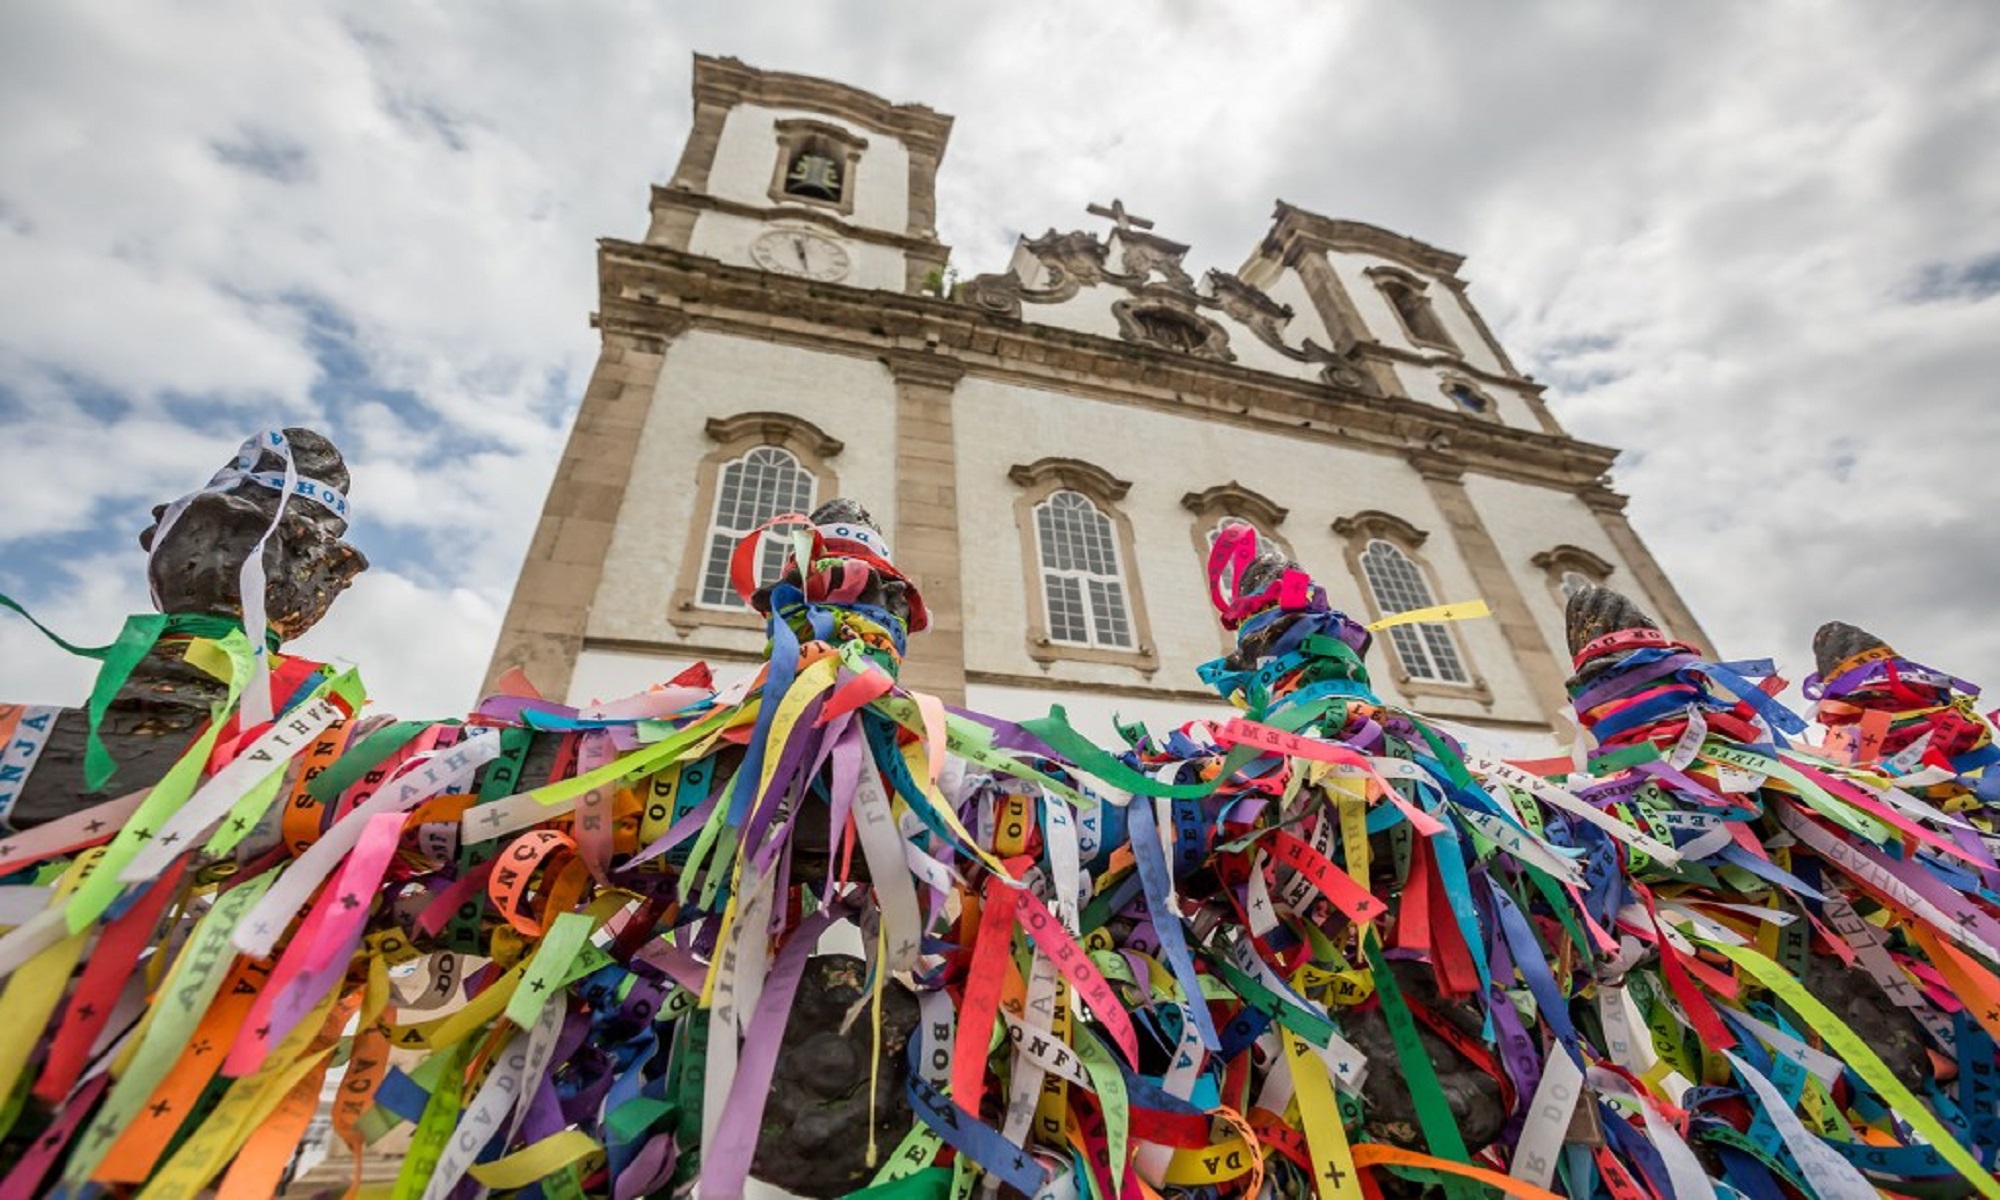 Spécial Brésil responsable - Carnaval, Salvador de Bahia